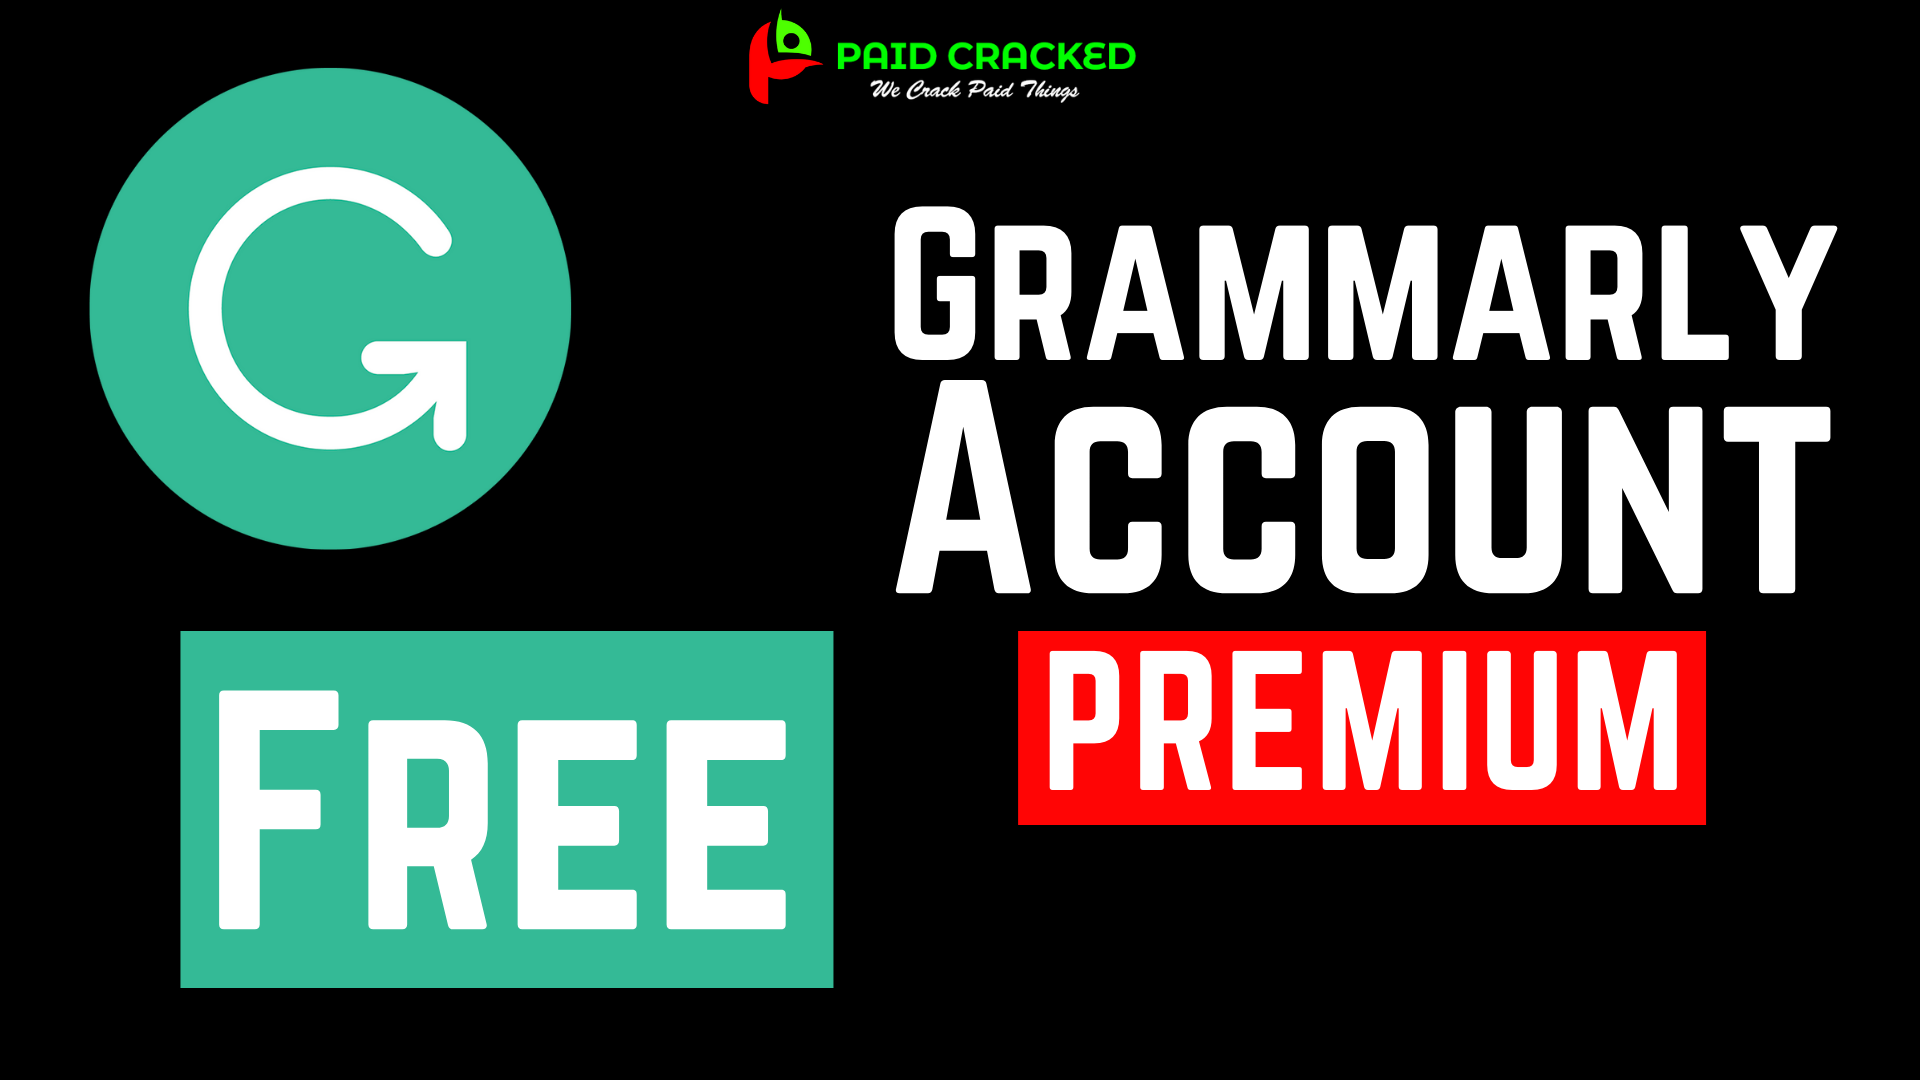 grammarly free account 2021